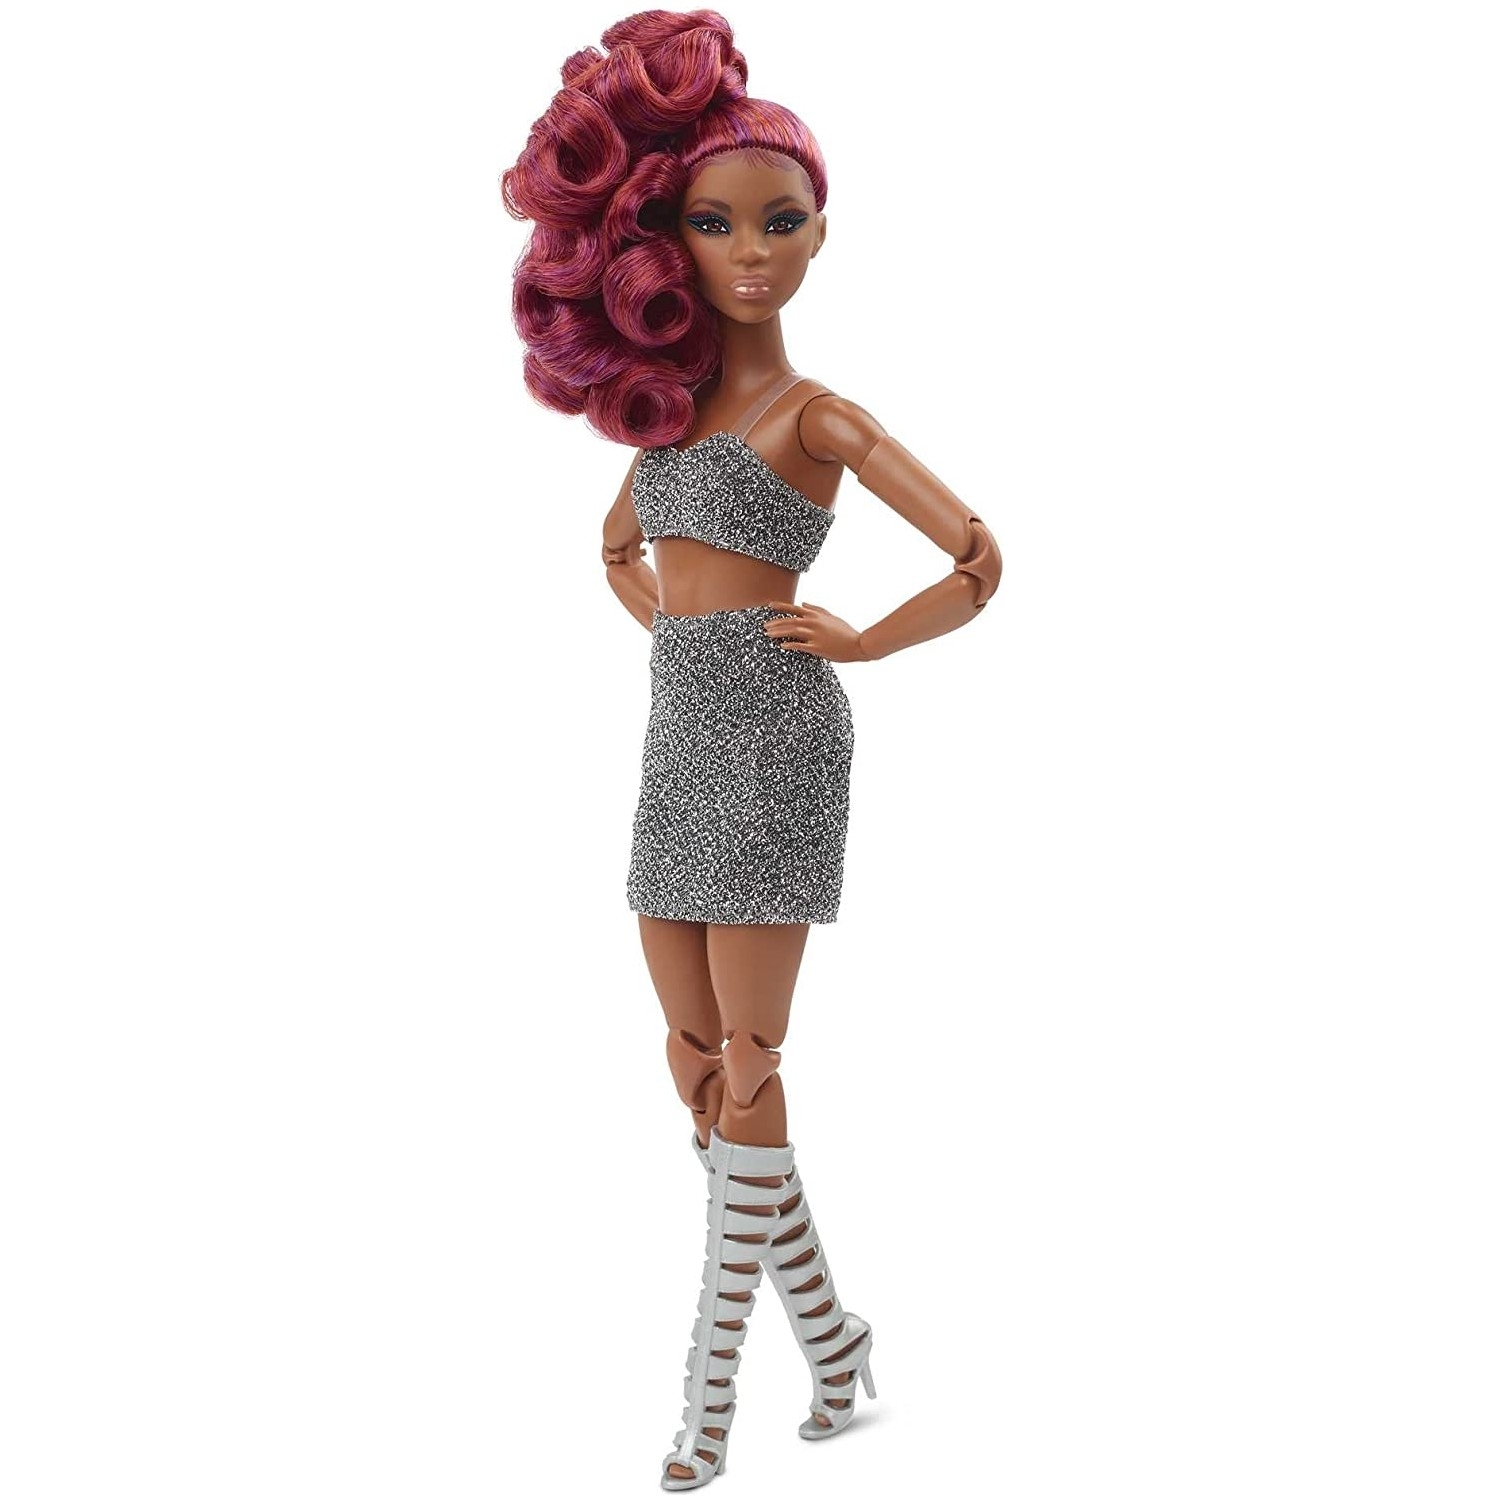 Barbie%20Signature%20Looks%20Model%20Bebek%20HCB77